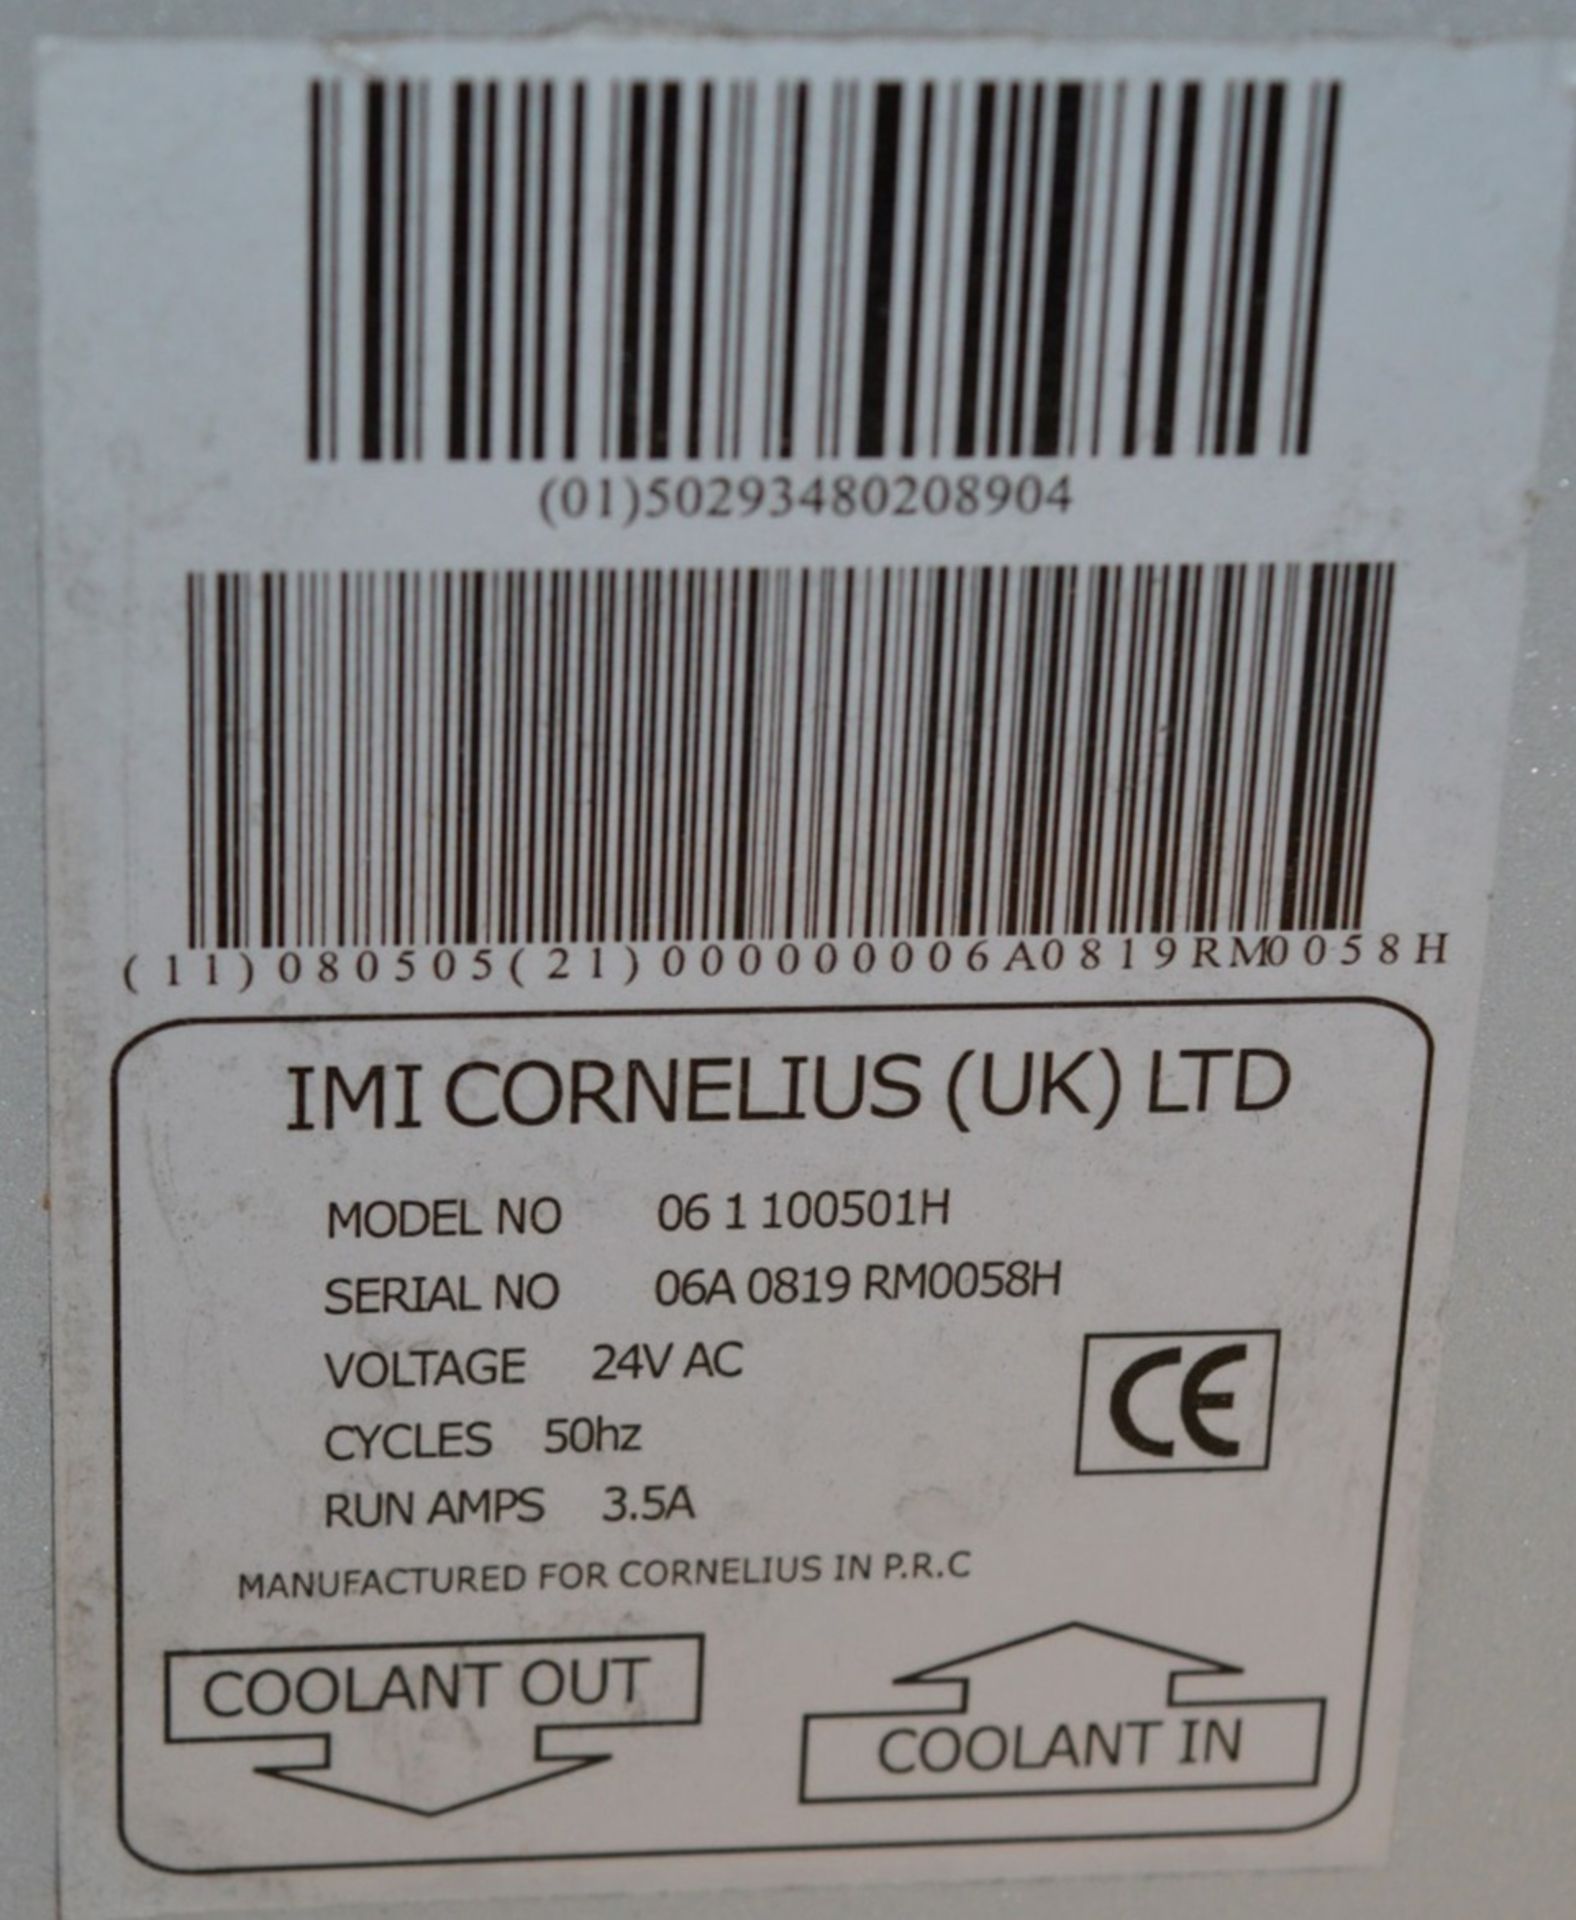 1 x Cornelius Heat Dump Unit For Cooled Split Cooling Systems - Model 061100502H - CL011 - Ref IT241 - Image 7 of 8